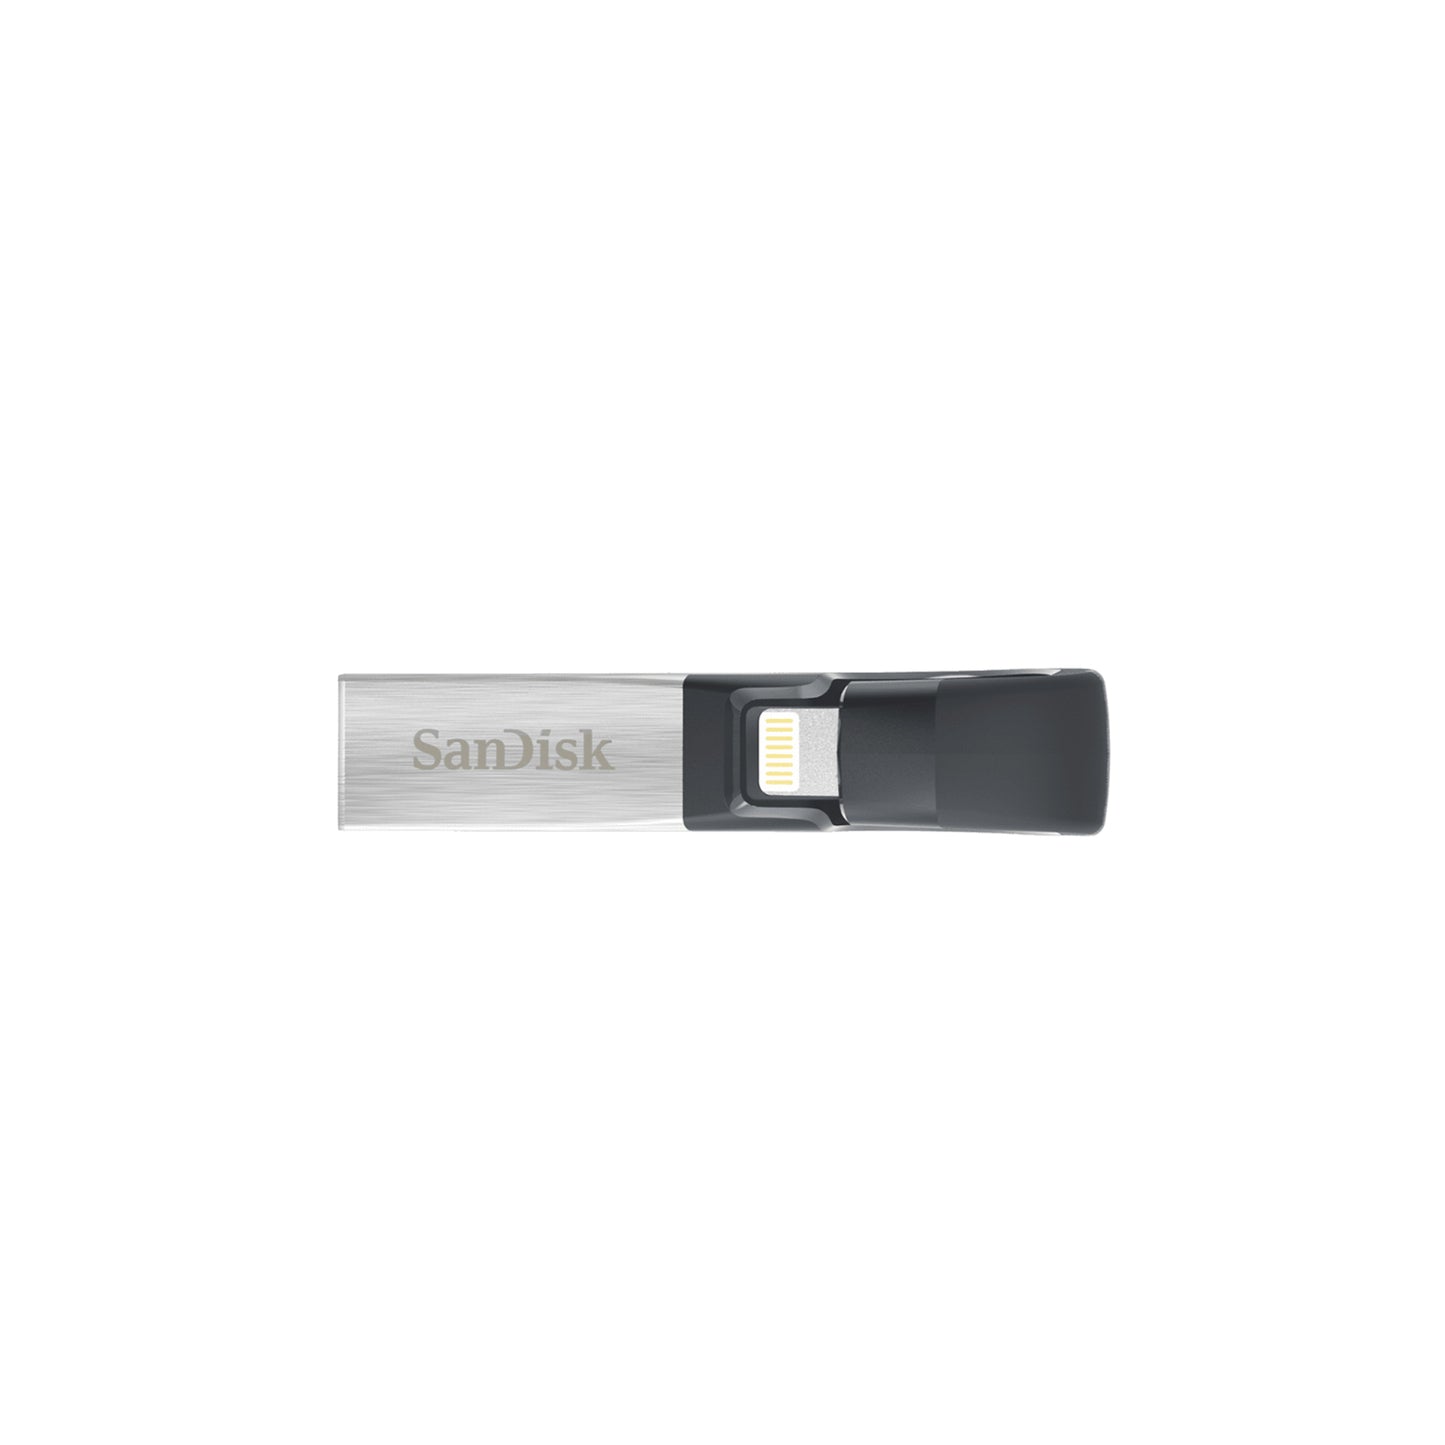 SANDISK iXpand Version 2 OTG Flash Drive (32gb) - Silver/Black